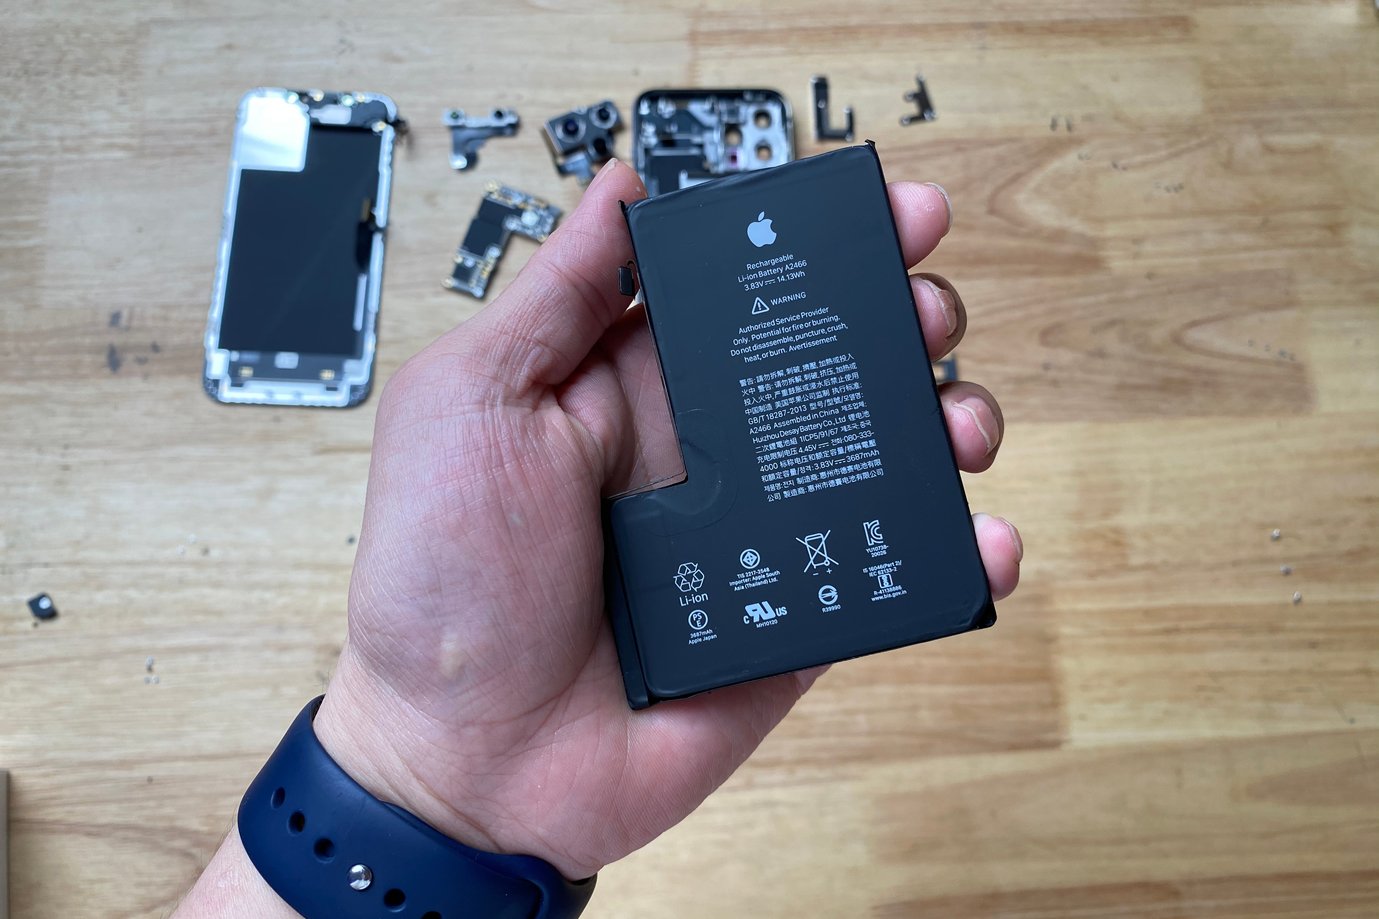 Apple iPhone 12 Pro Max has a 3,687mAh battery